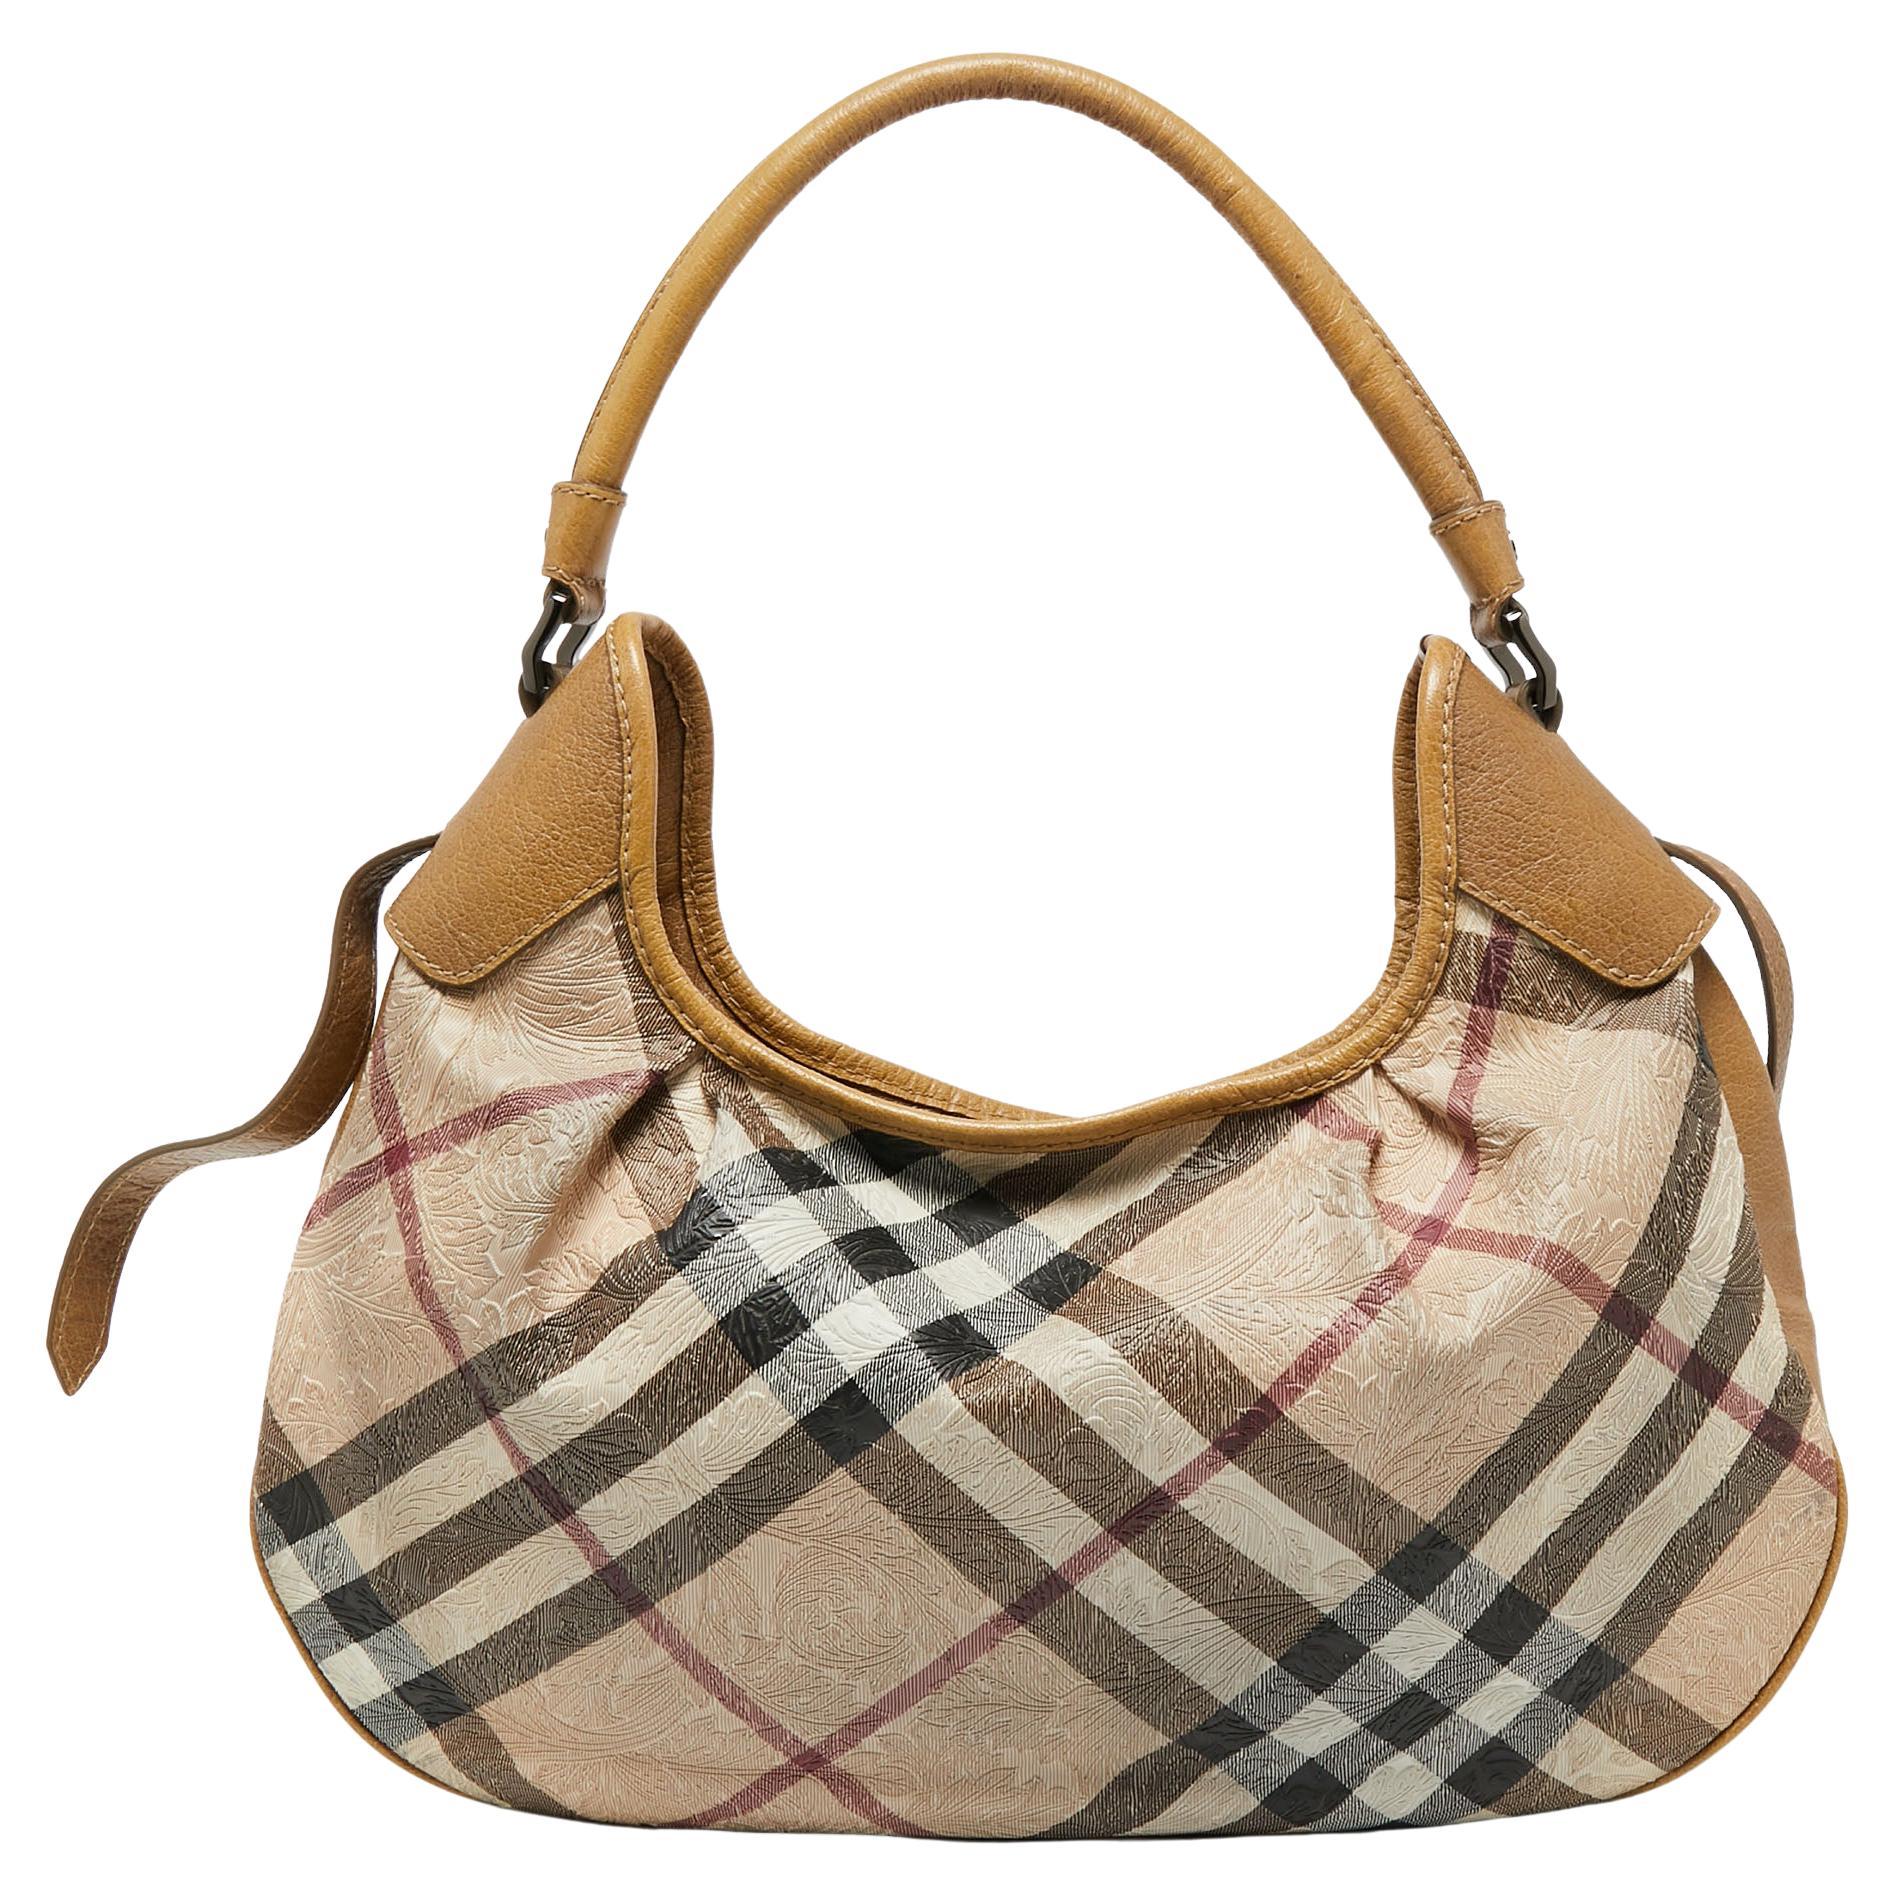 Burberry Hobo Bag Nova Check Plaid Metallic Shoulder Handbag